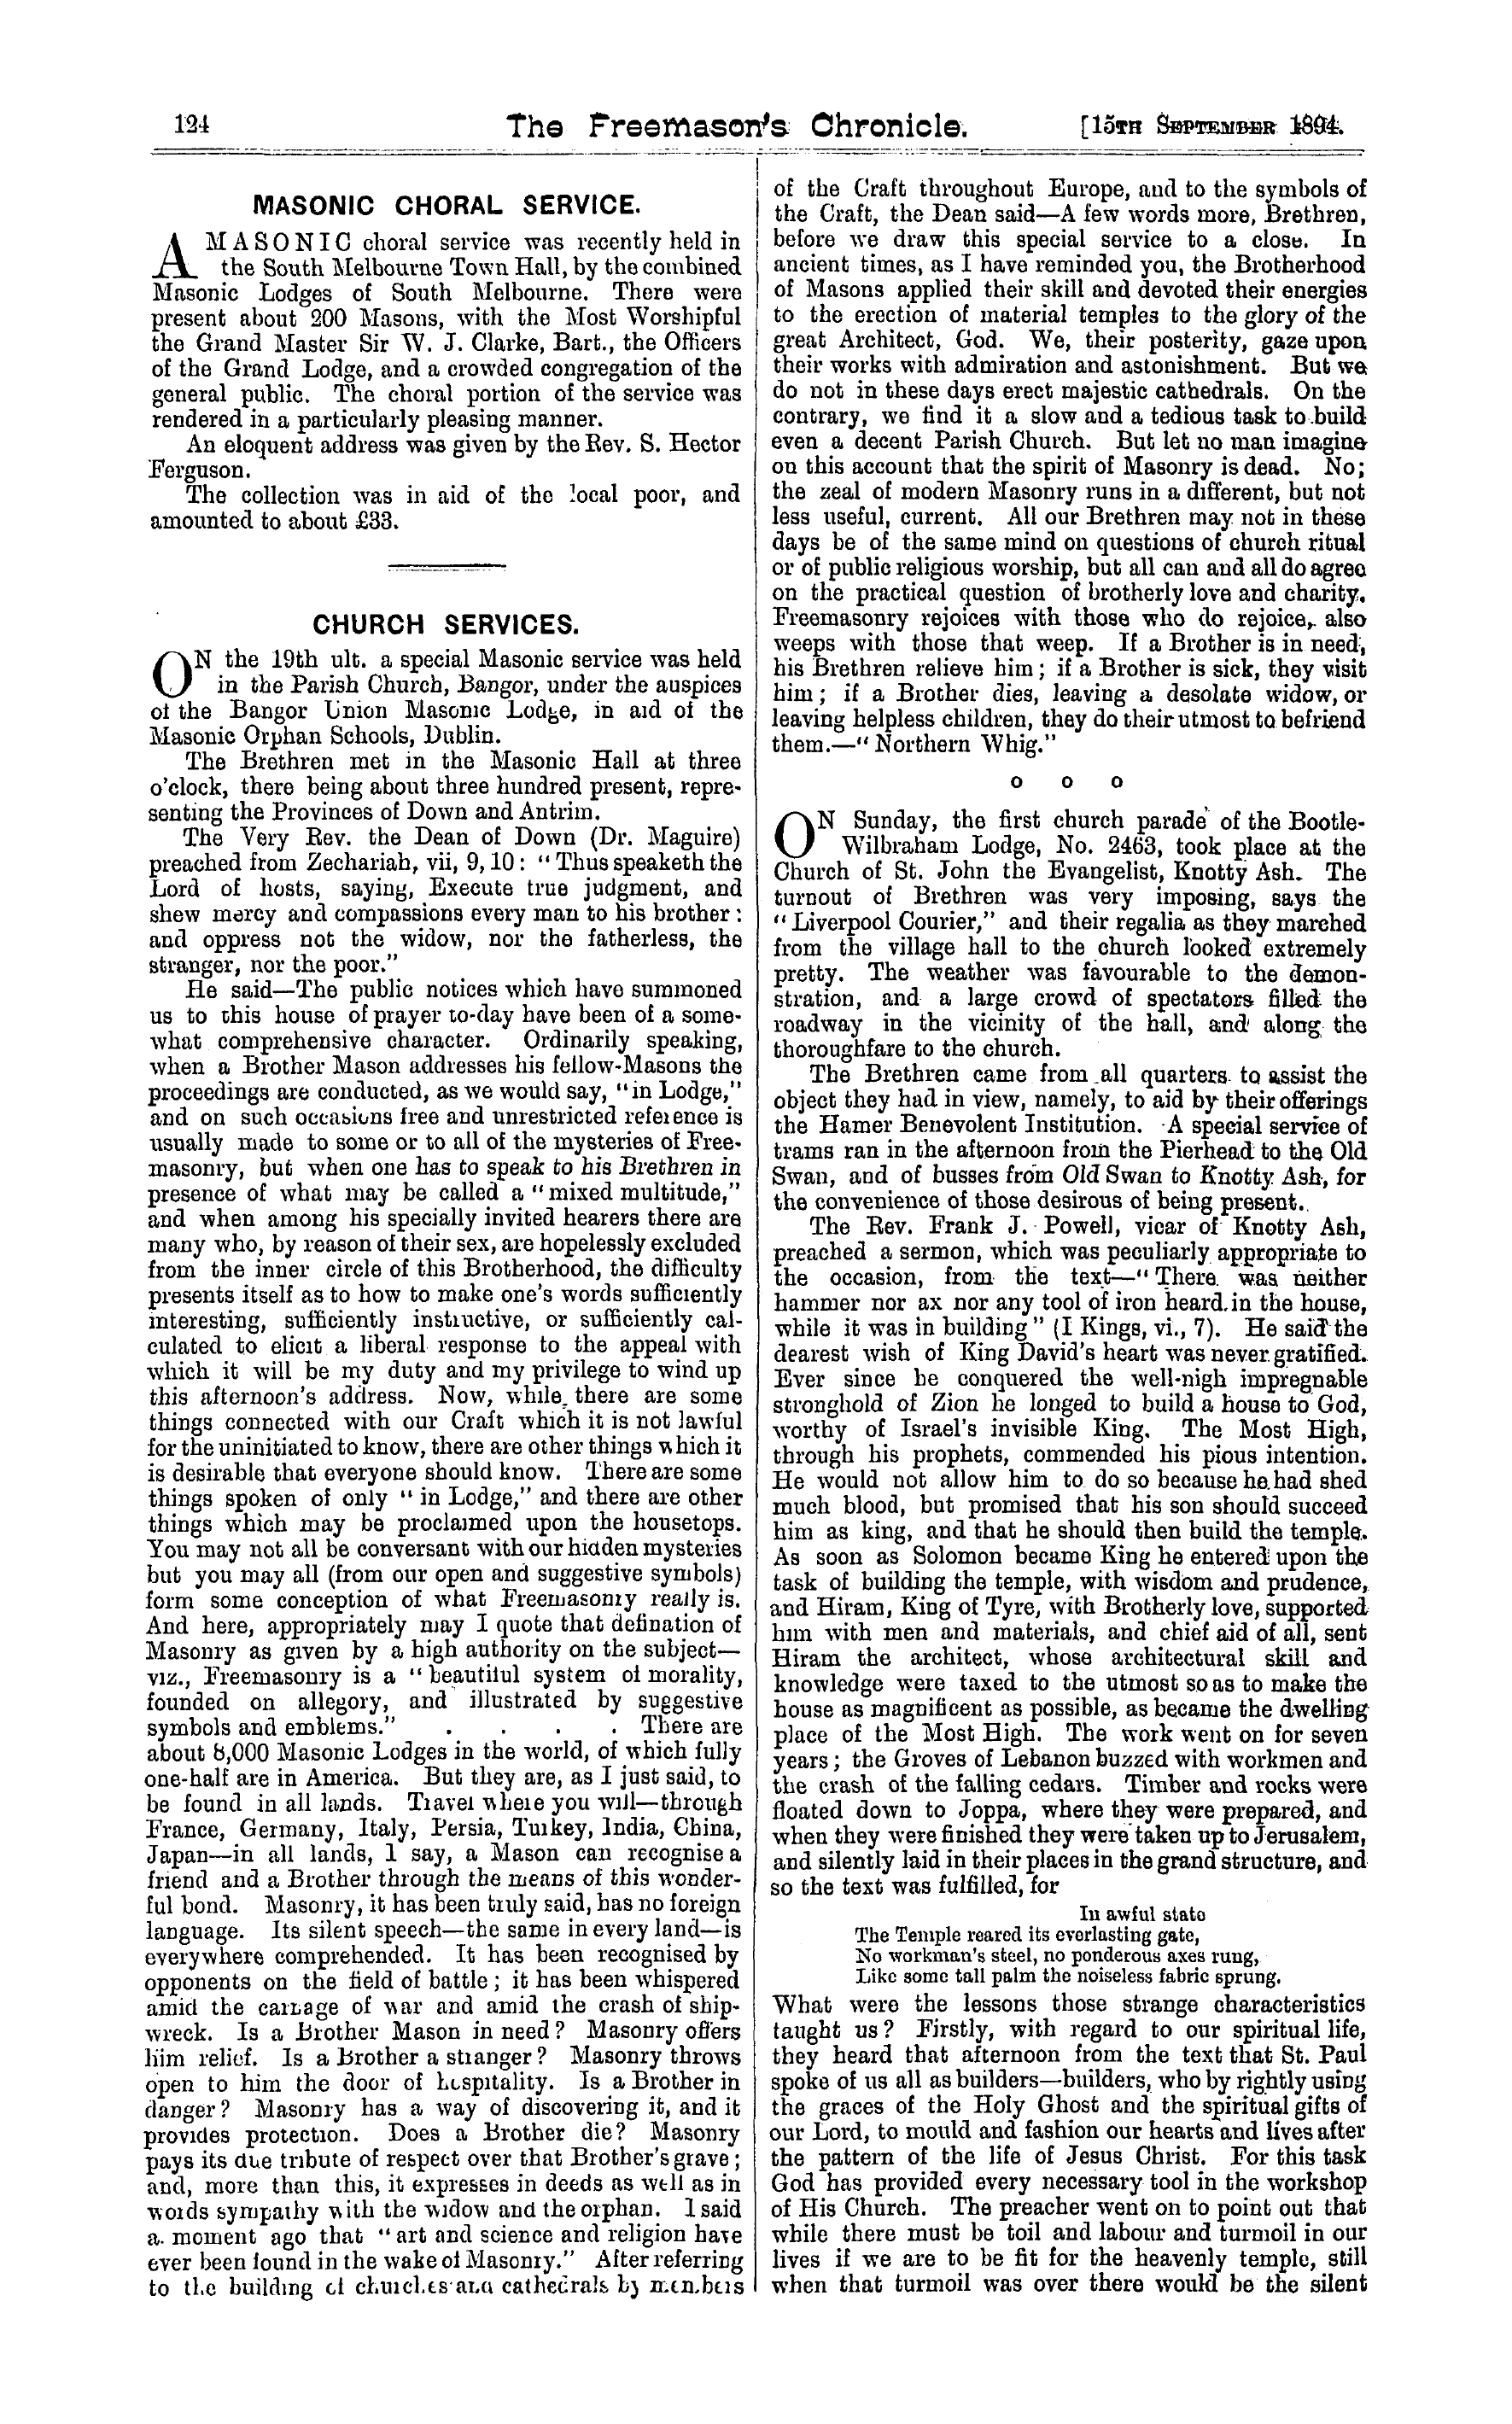 The Freemason's Chronicle: 1894-09-15: 4